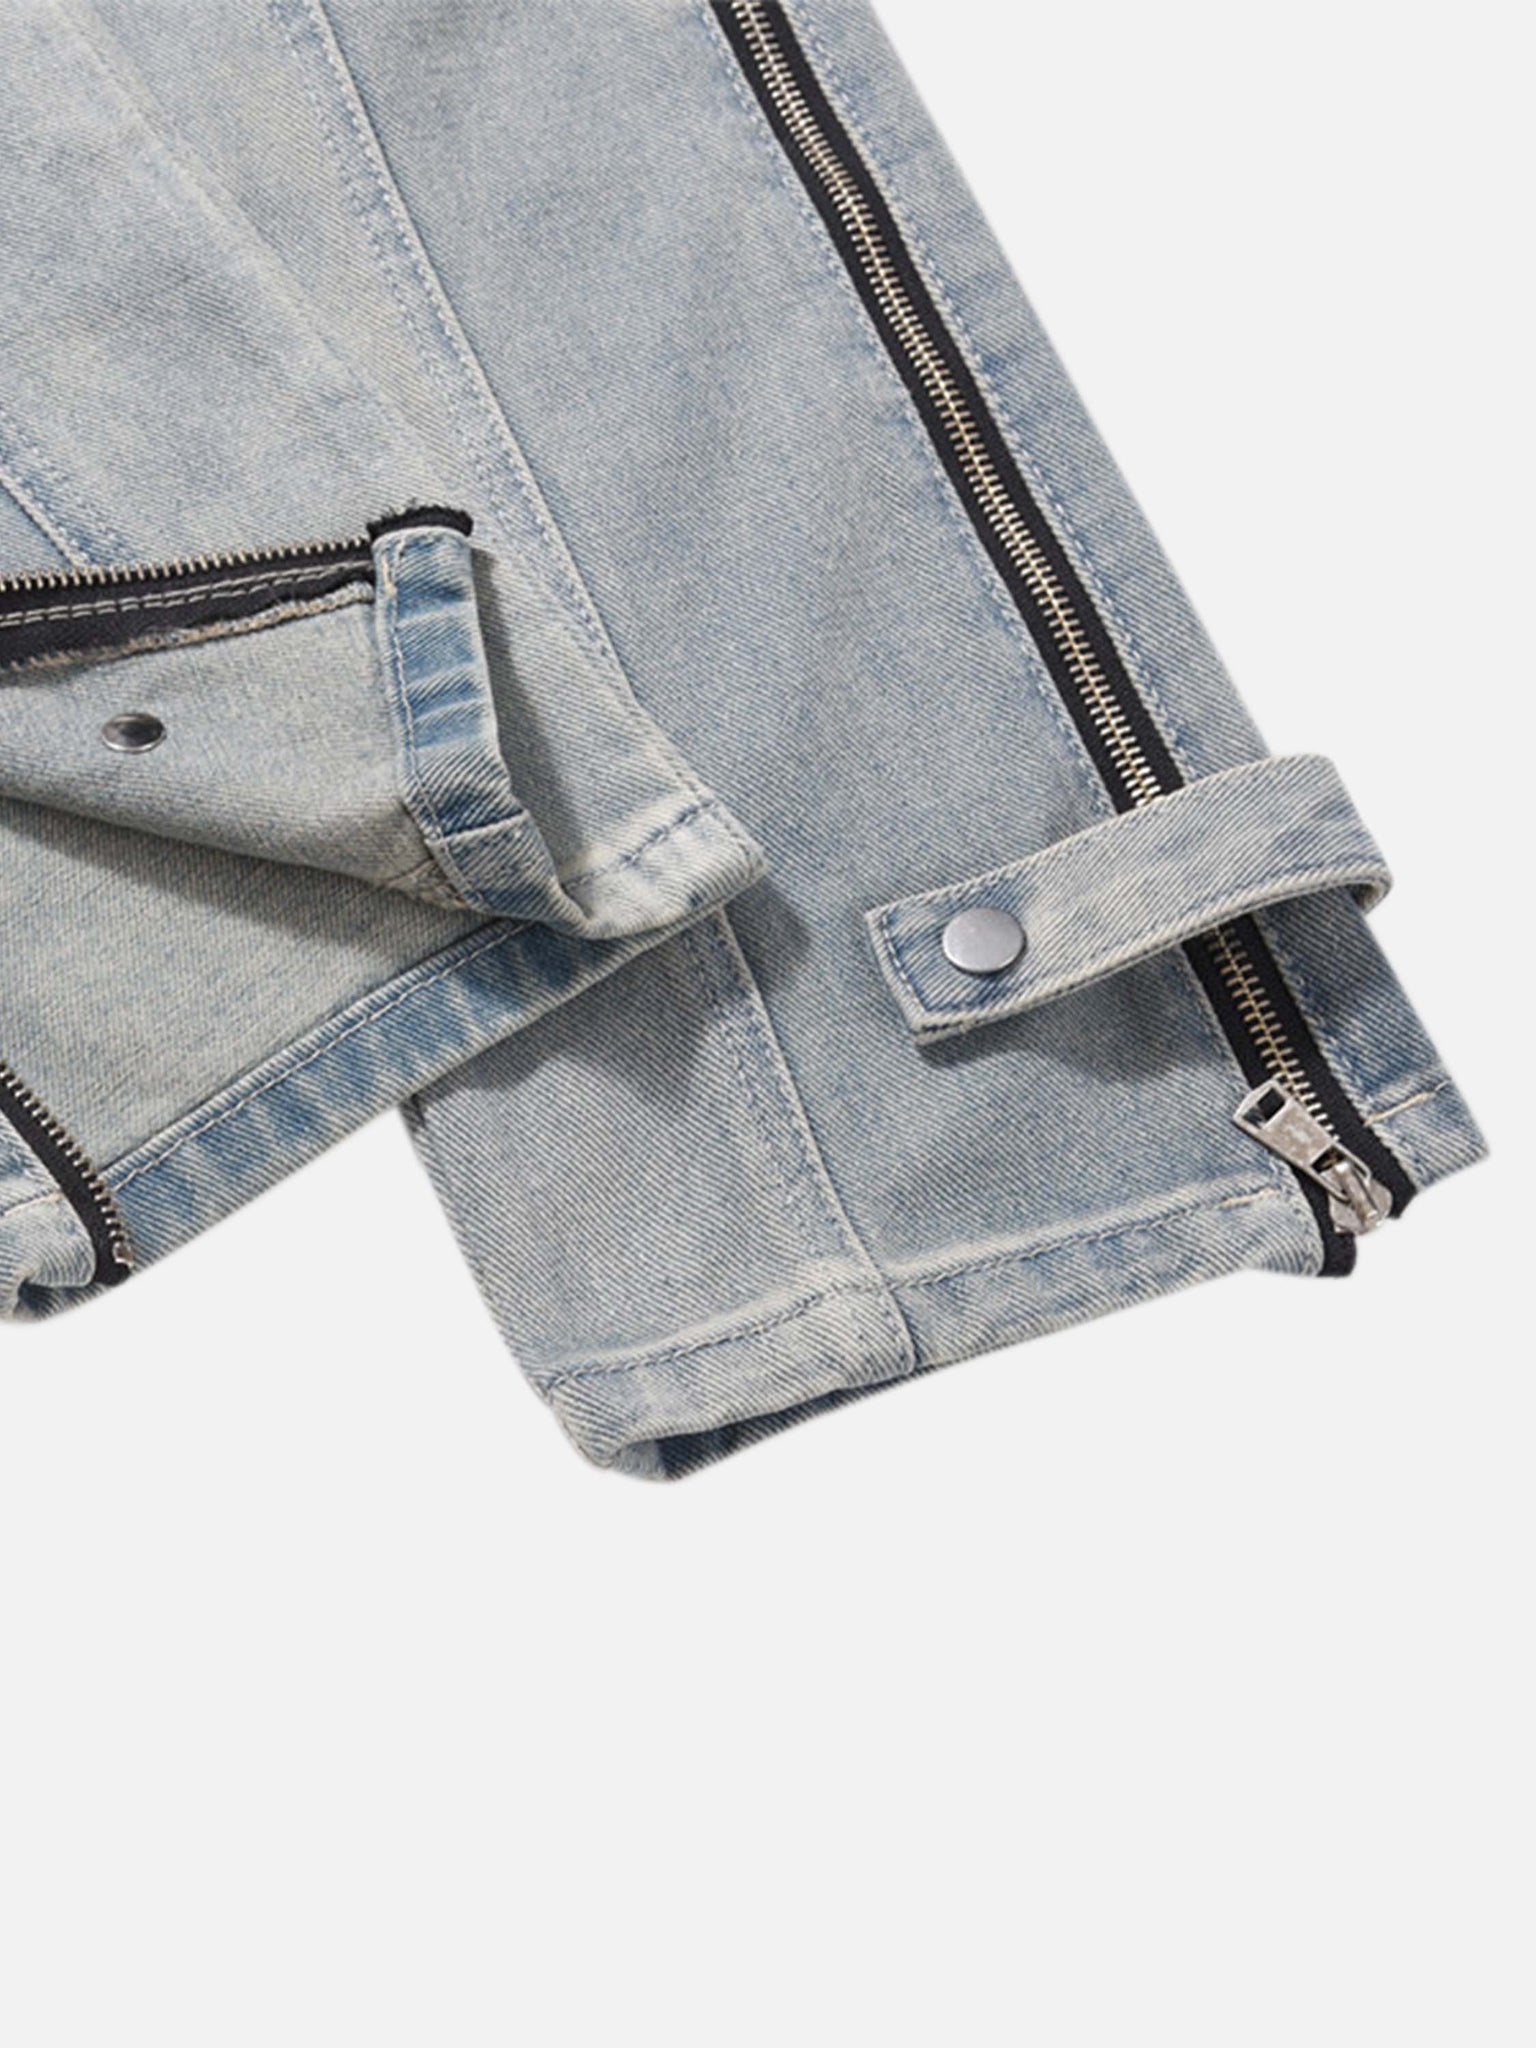 The Supermade High Street Hip-hop Design Sense Zipper Straight Jeans Nine-point Pants